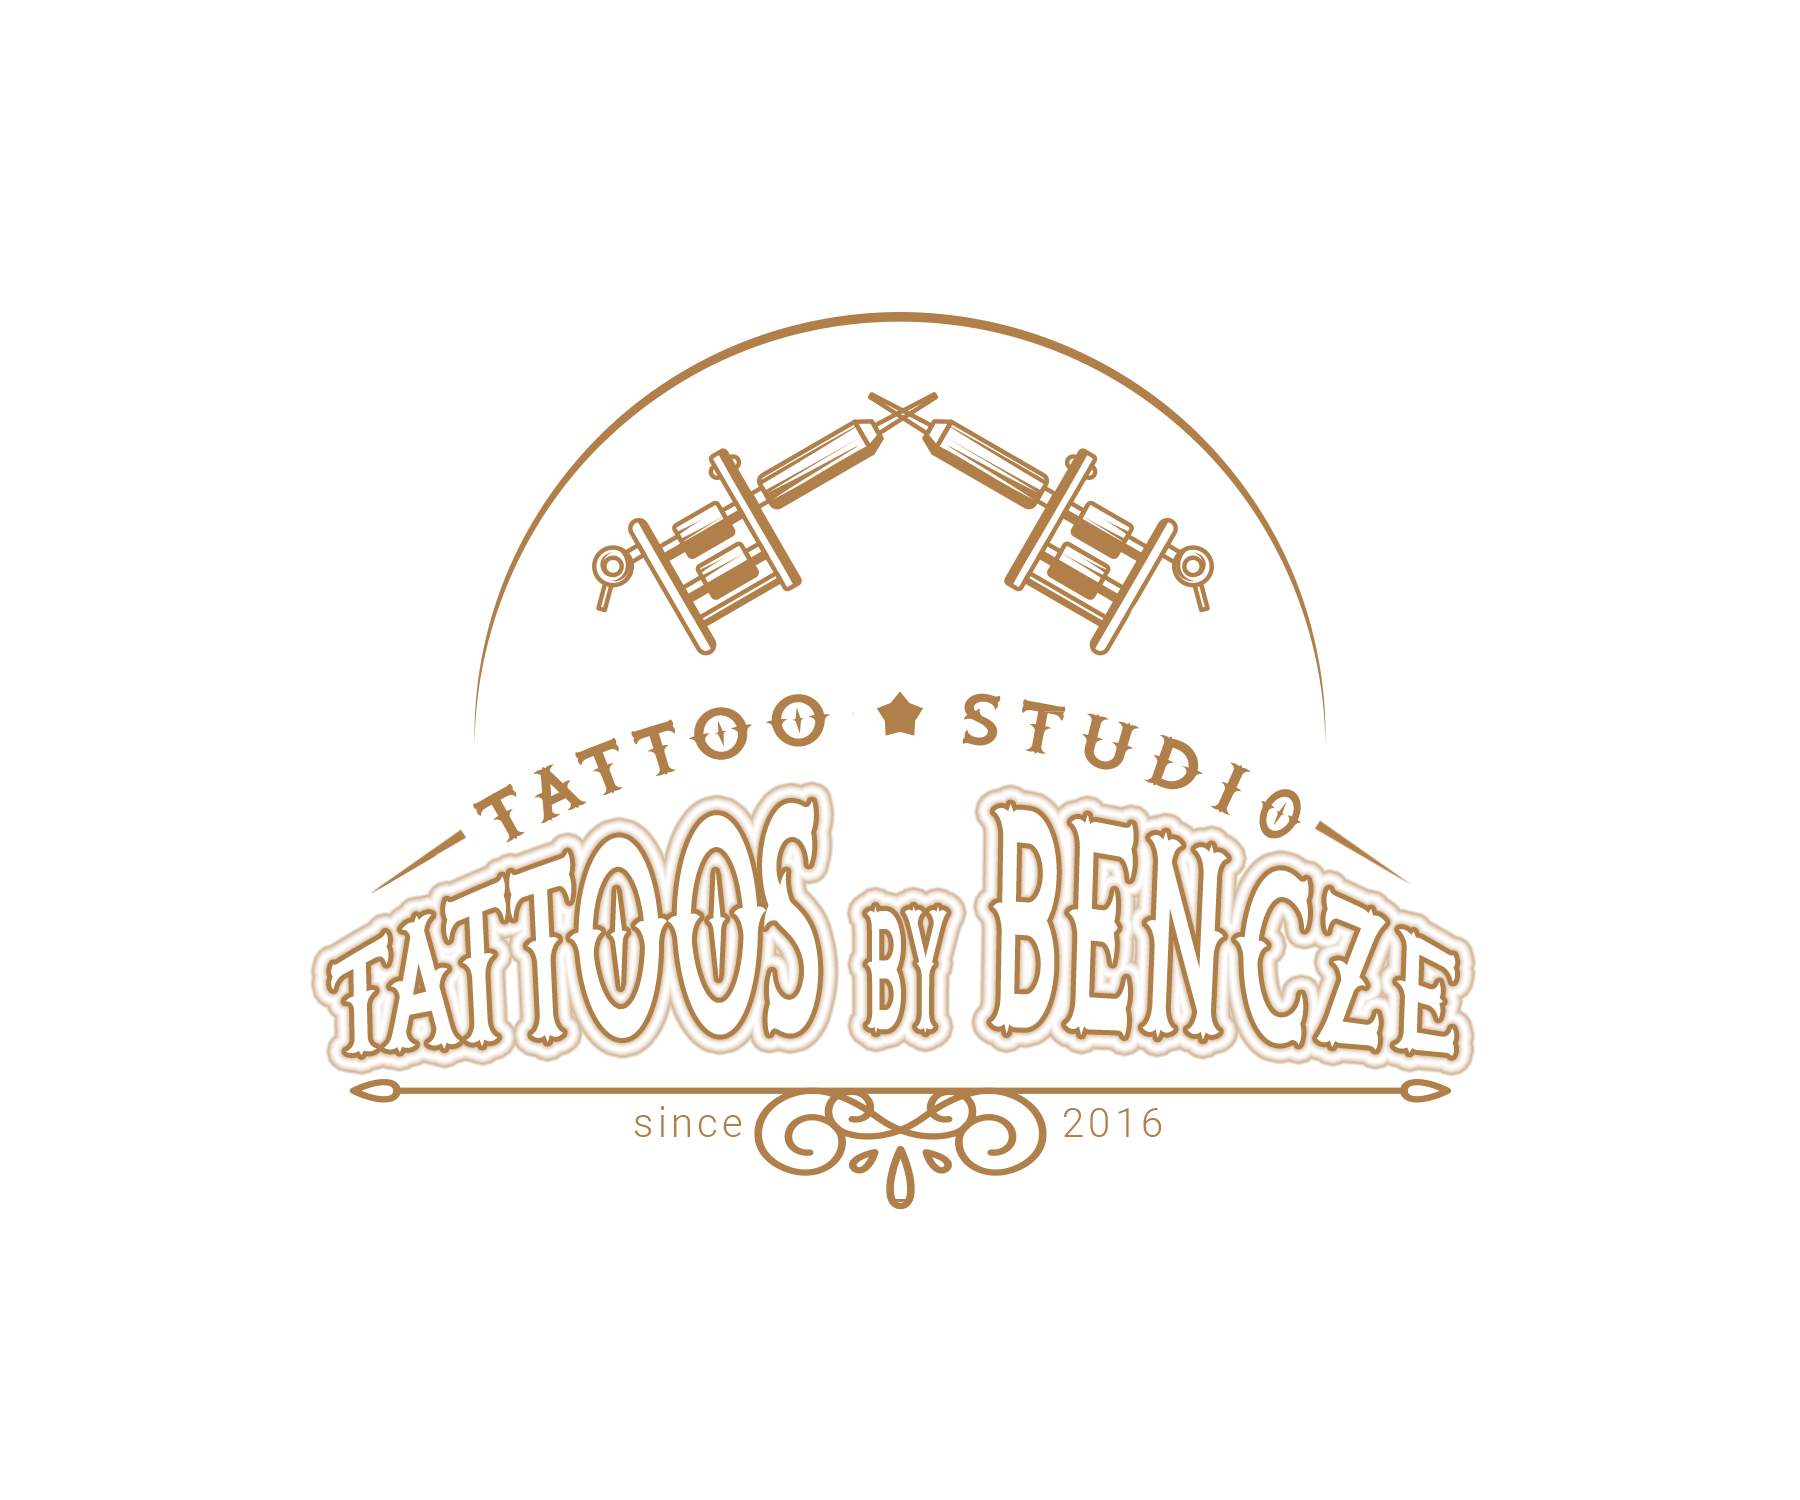 Tattoos by Bencze